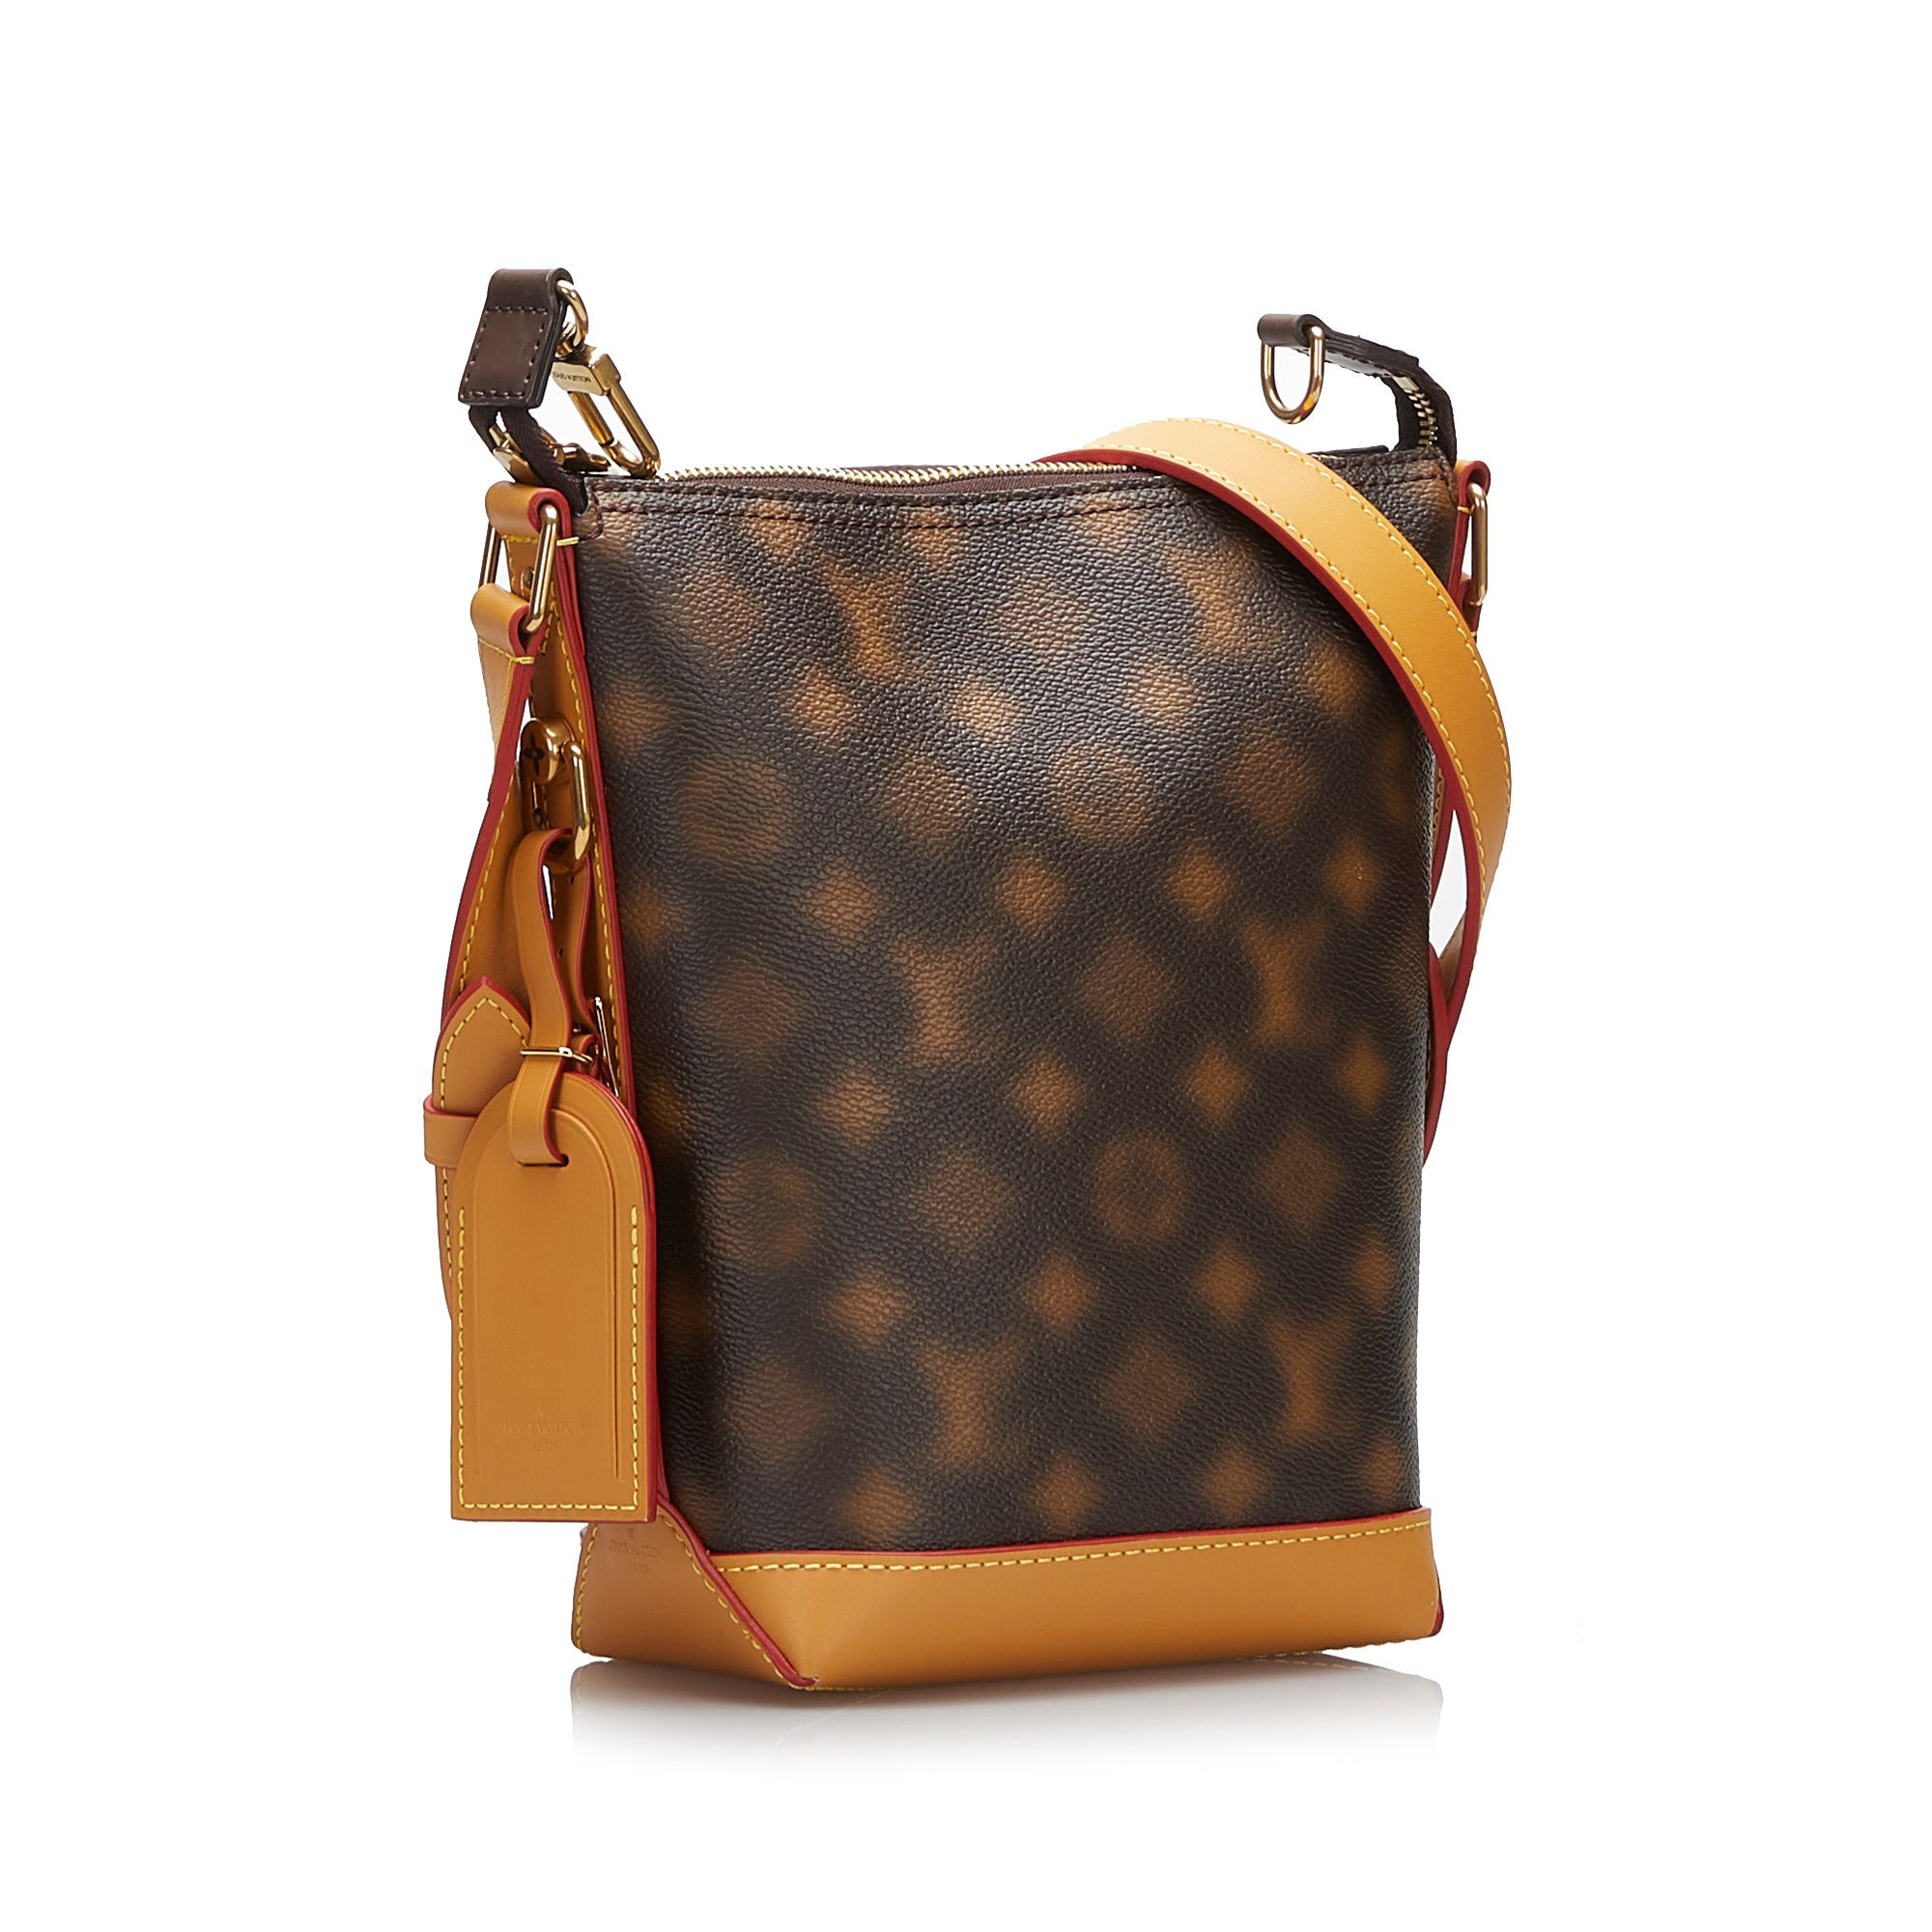 Louis Vuitton Bag- LV Louis Vuitton Bucket PM preloved like new